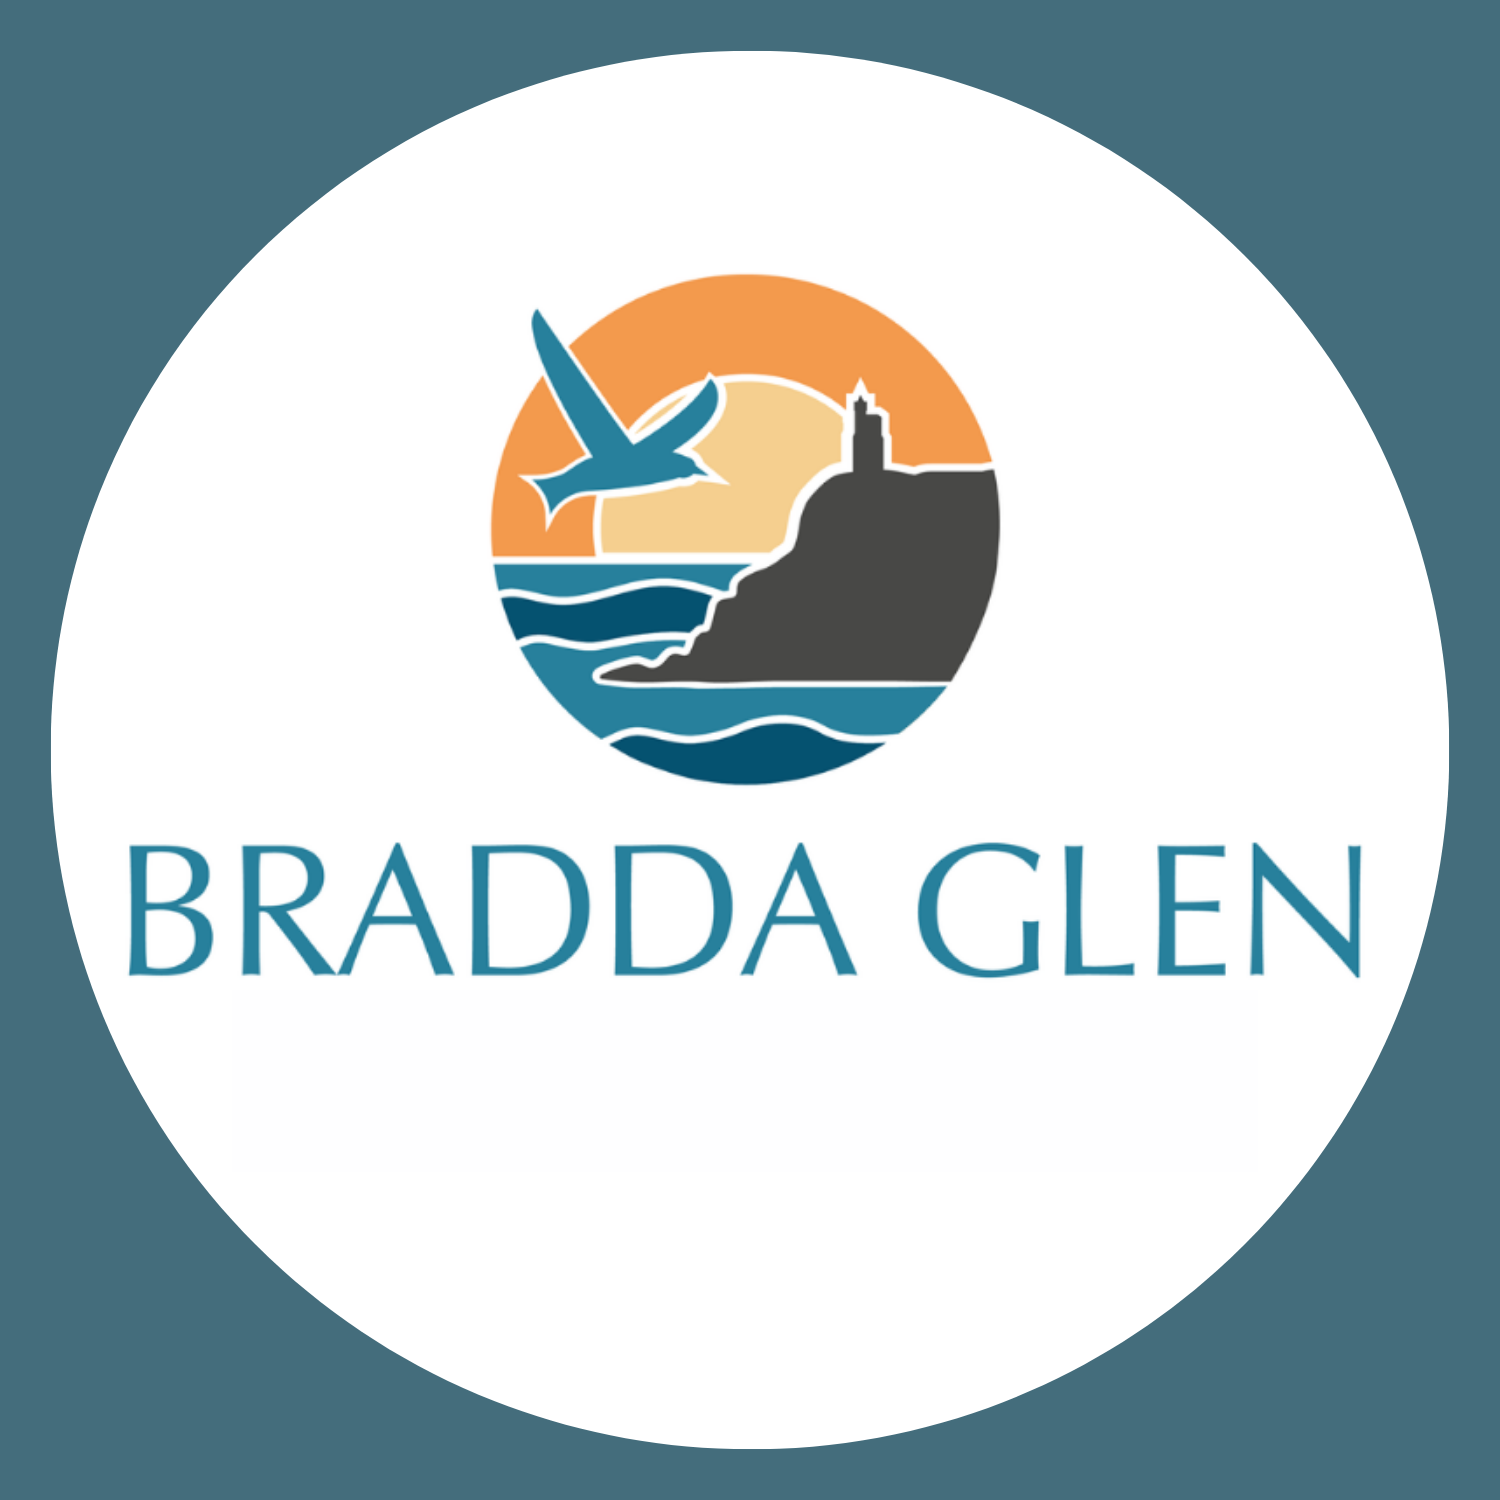 Bradda Glen Café & Restaurant Logo